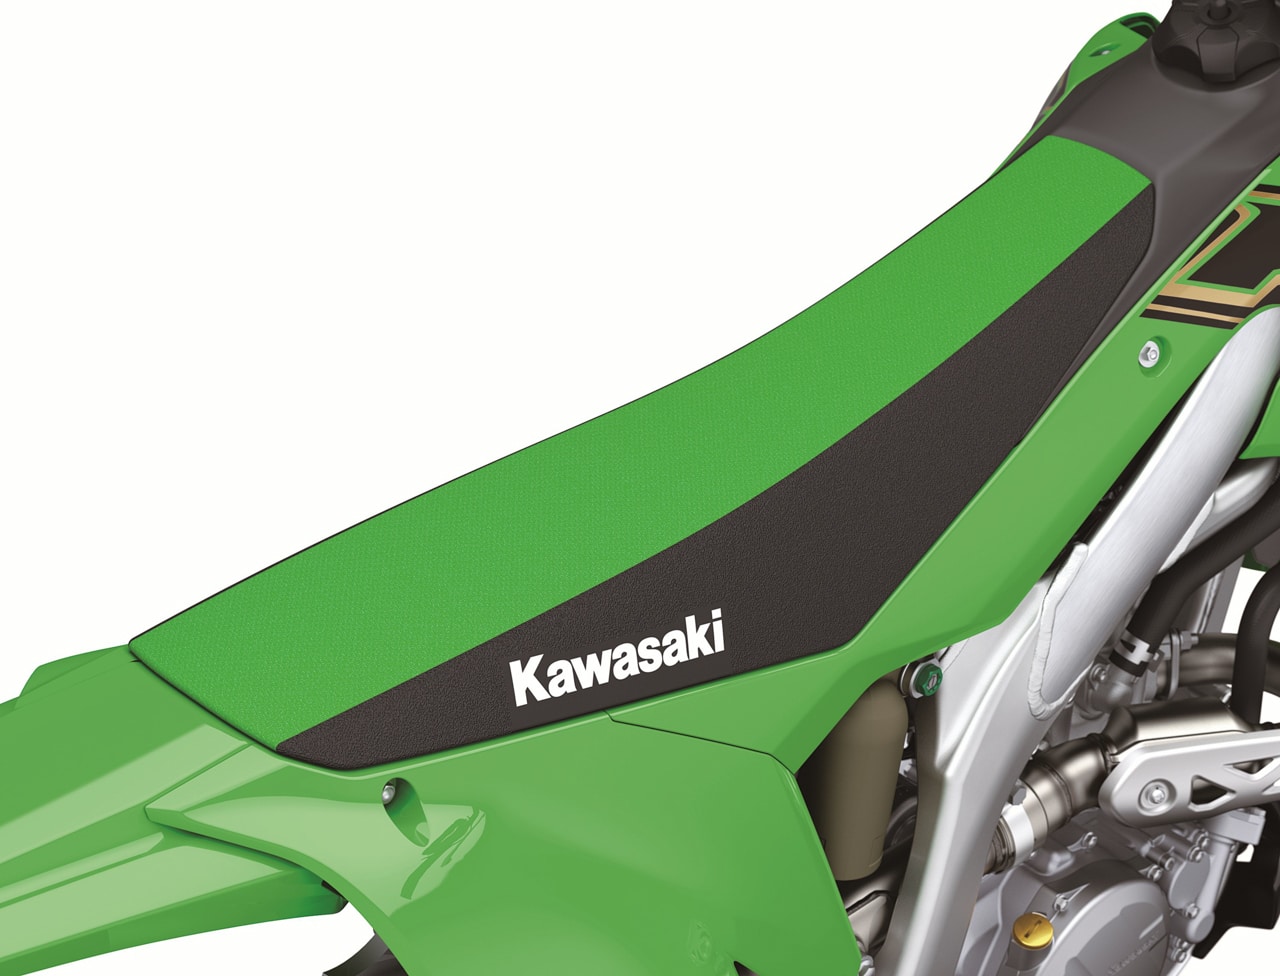 FIRST LOOK! ALL-NEW 2021 KAWASAKI KX250 & UPDATED DIRT BIKES - Motocross Action Magazine